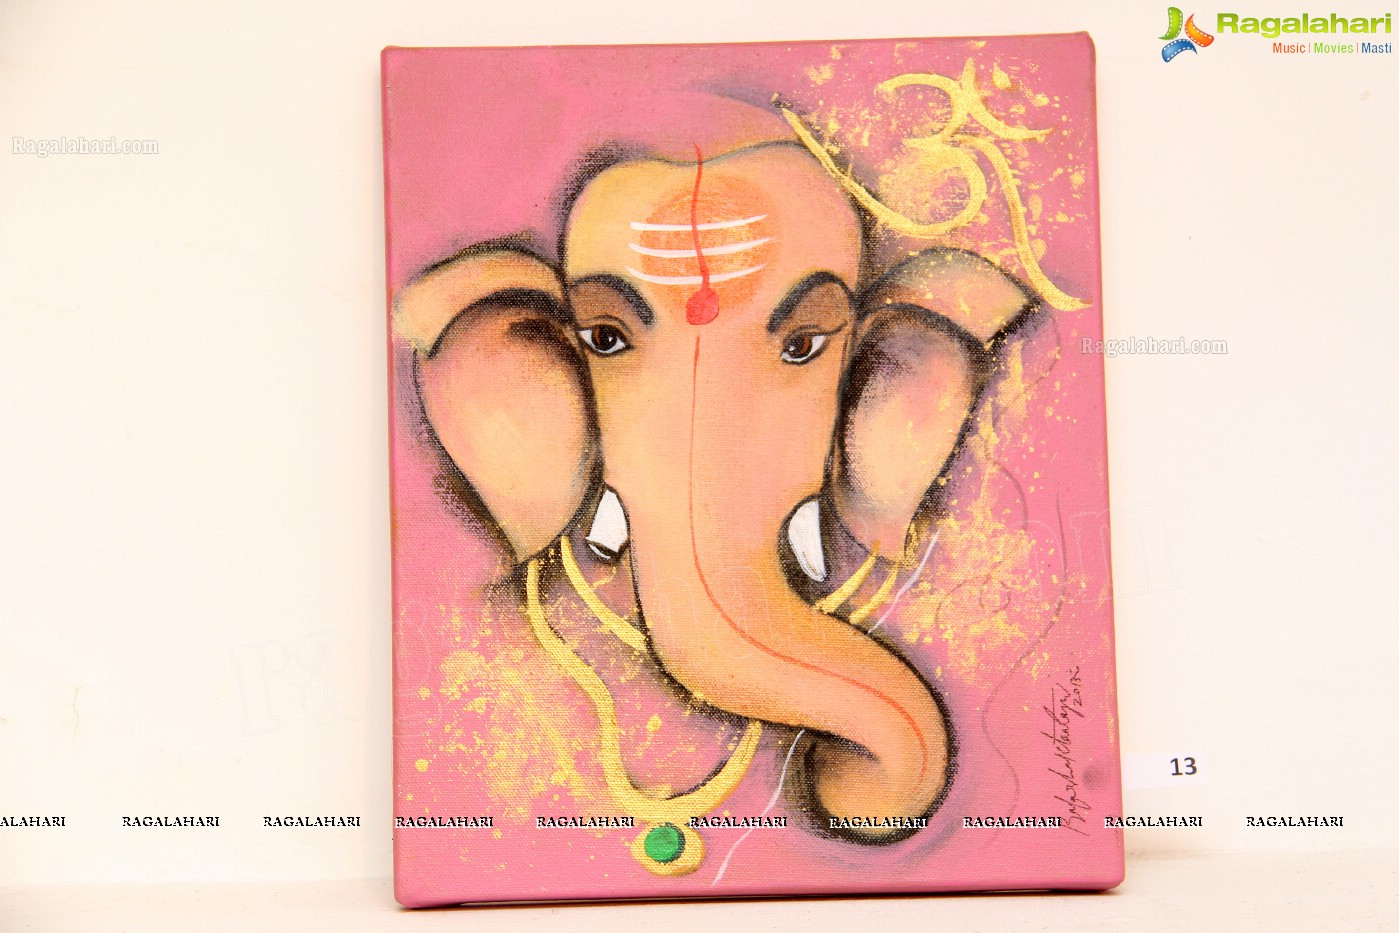 Avighna - Solo Show of Ganesha Paintings by Bala Bhakta Raju